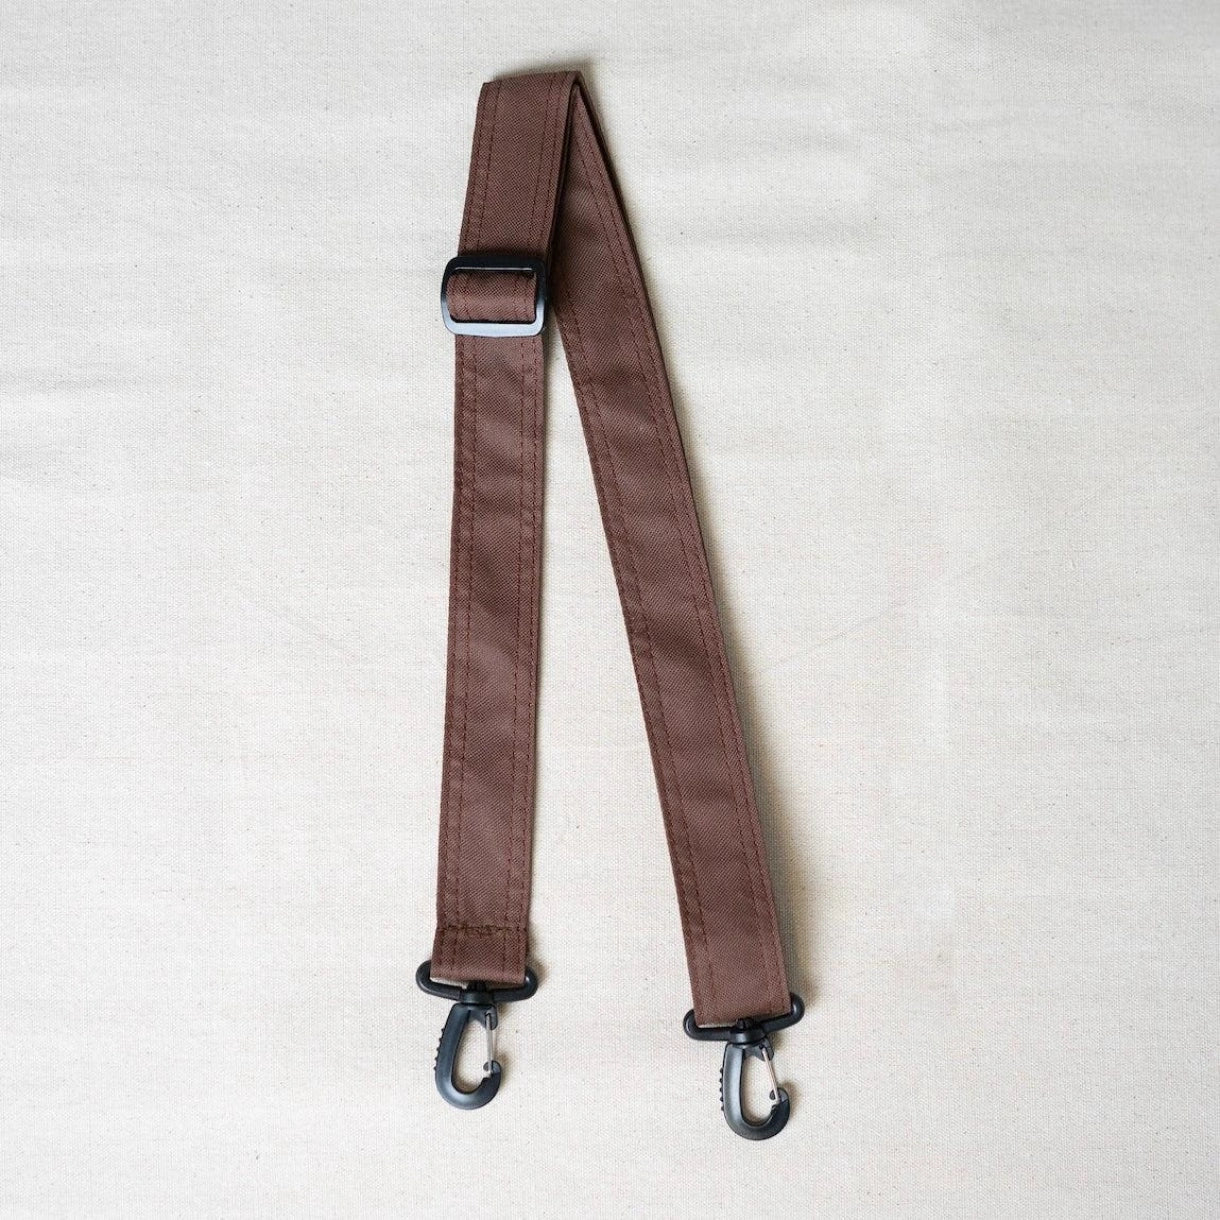 seal brown strap